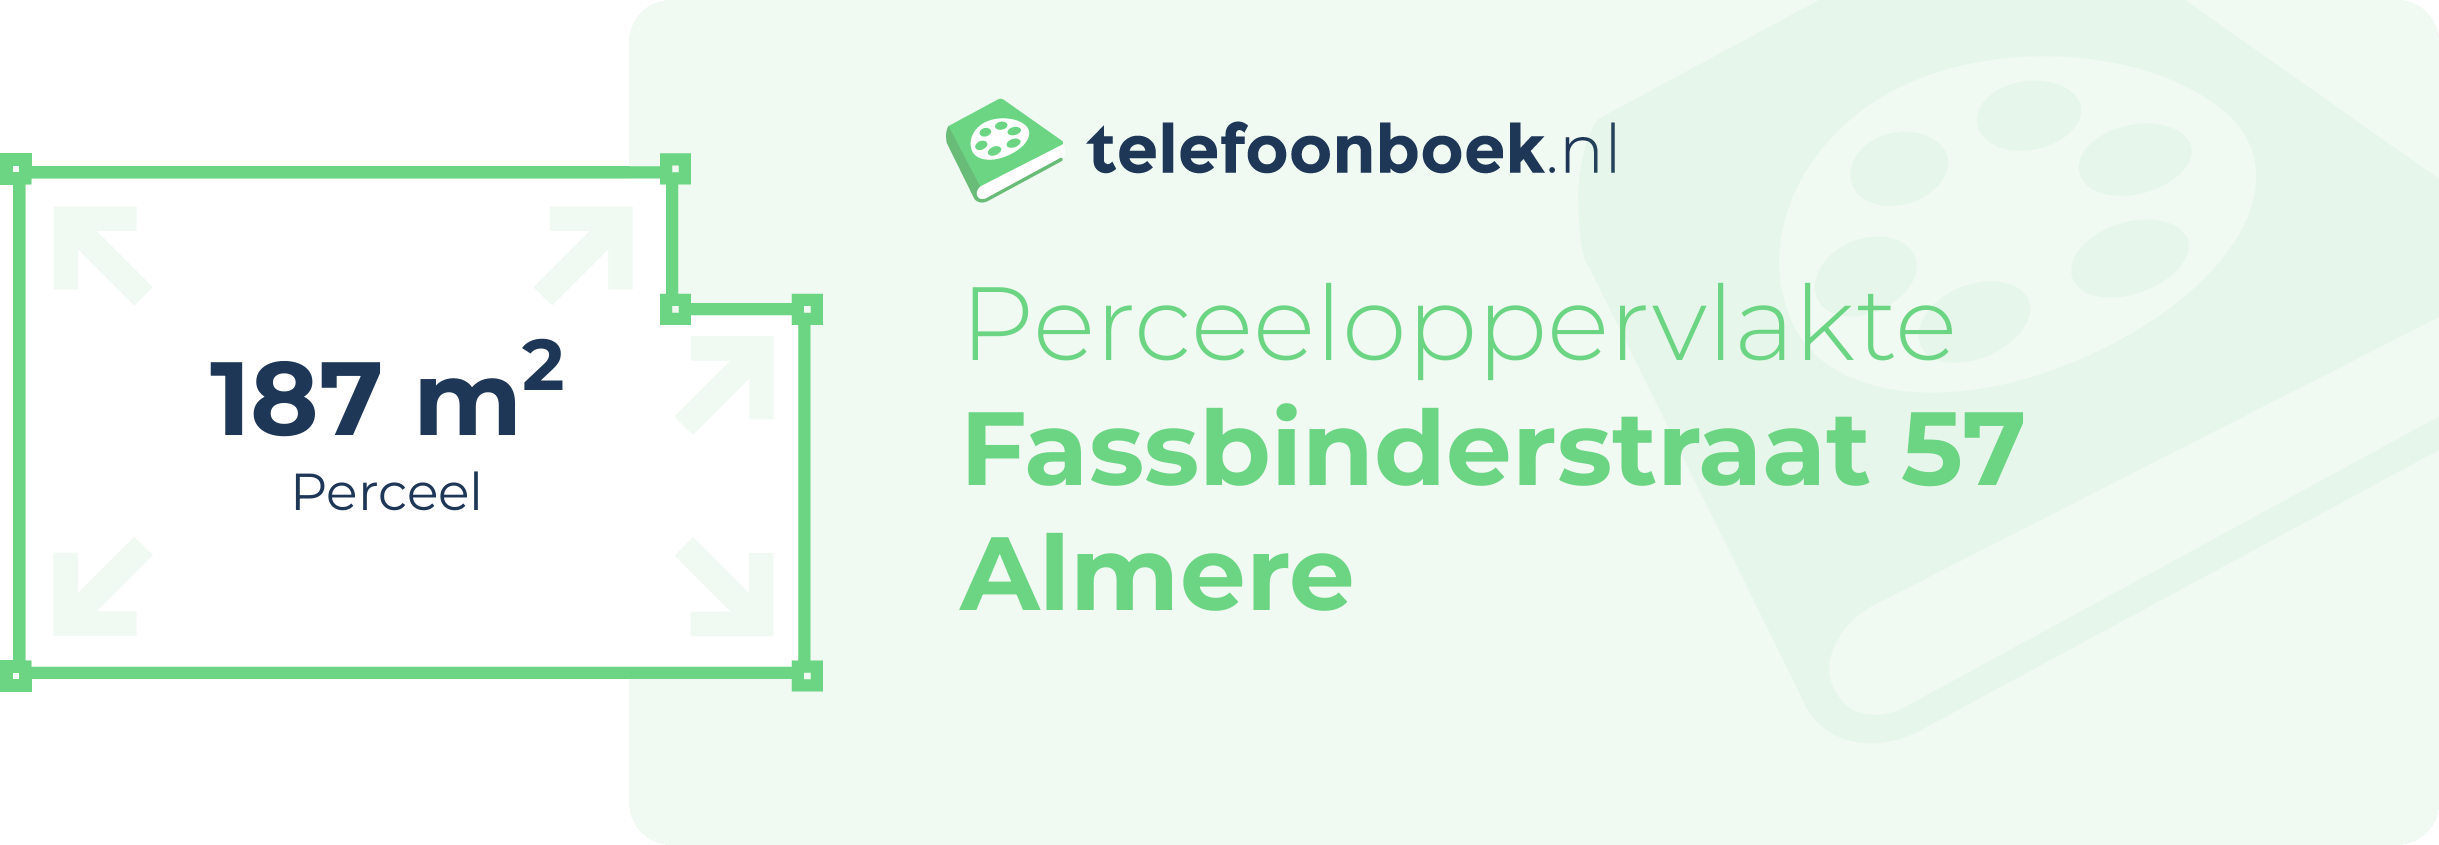 Perceeloppervlakte Fassbinderstraat 57 Almere